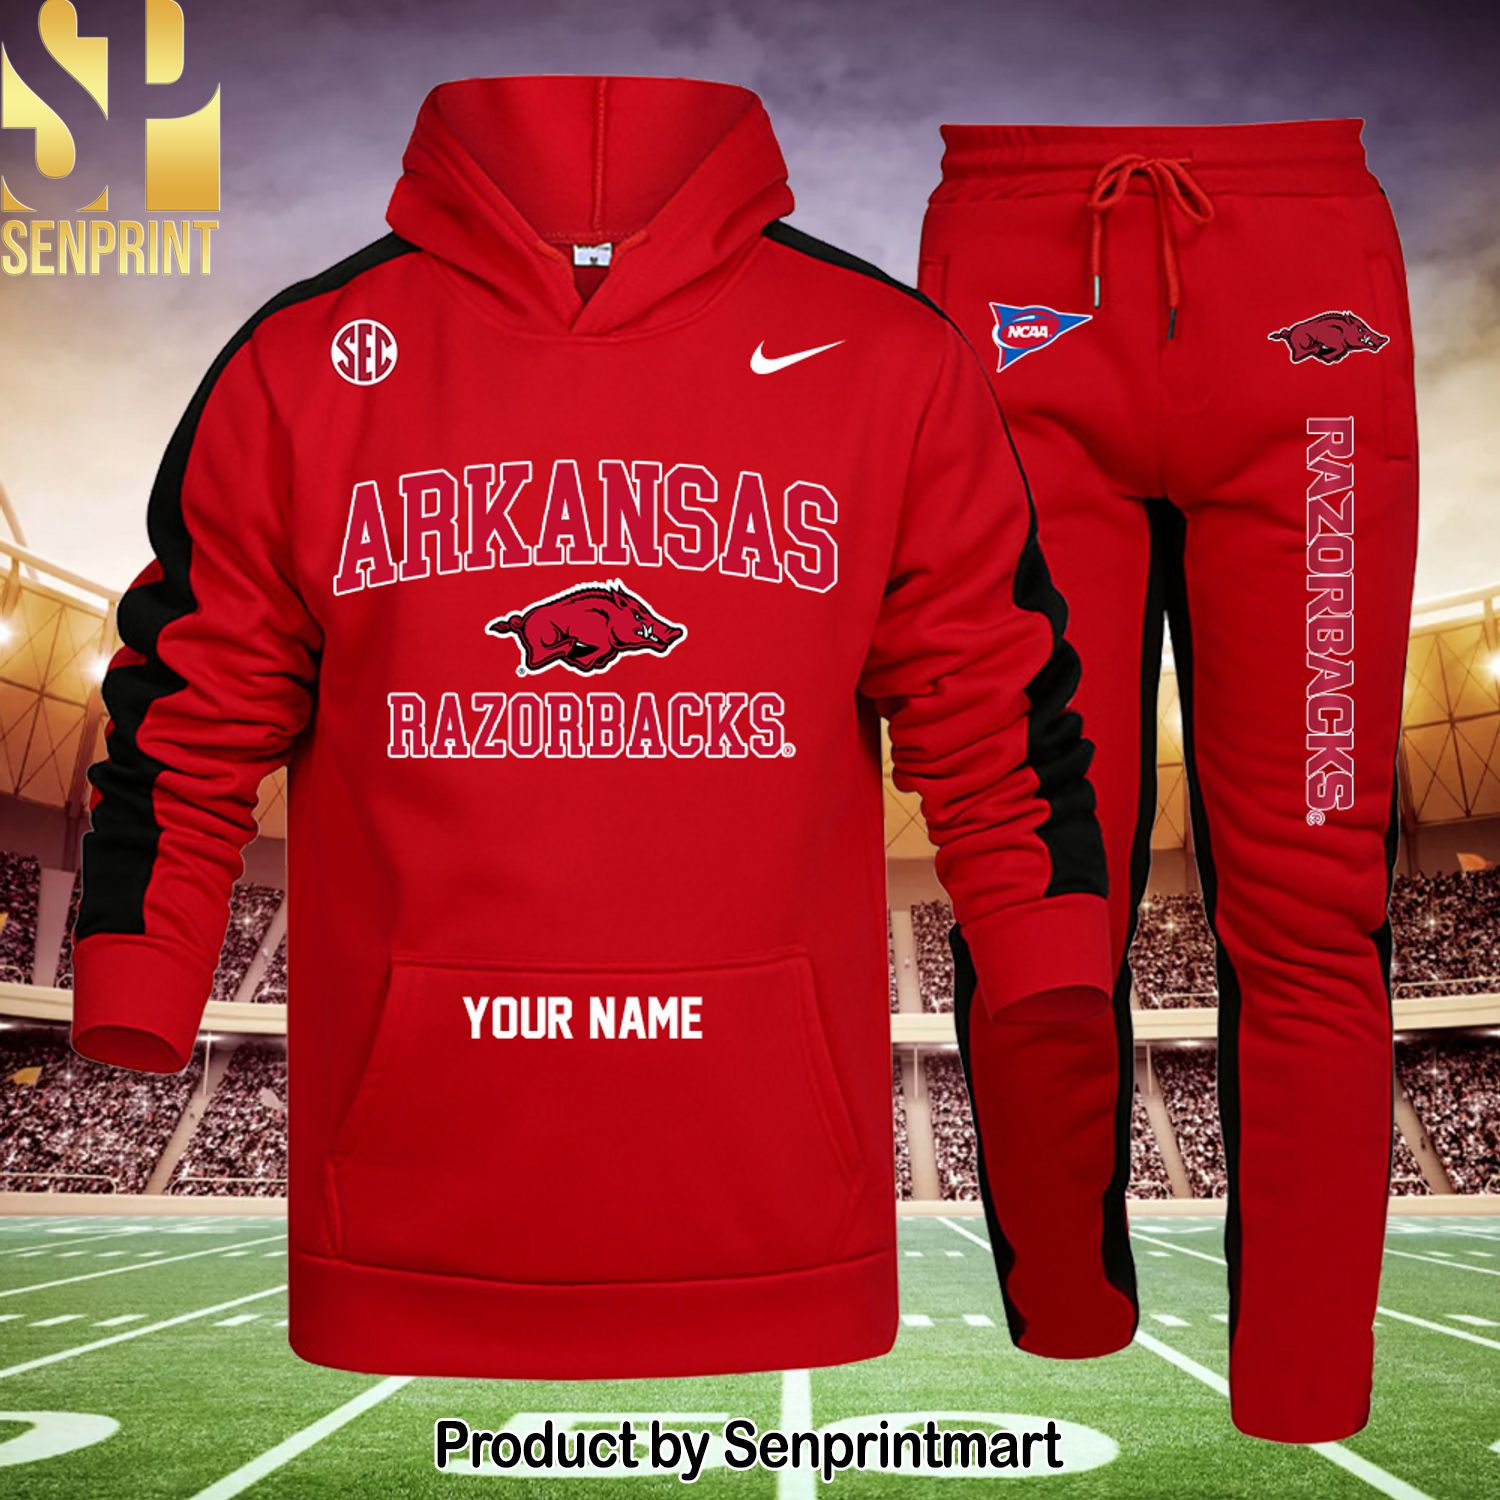 Arkansas Razorbacks New Version Shirt and Pants